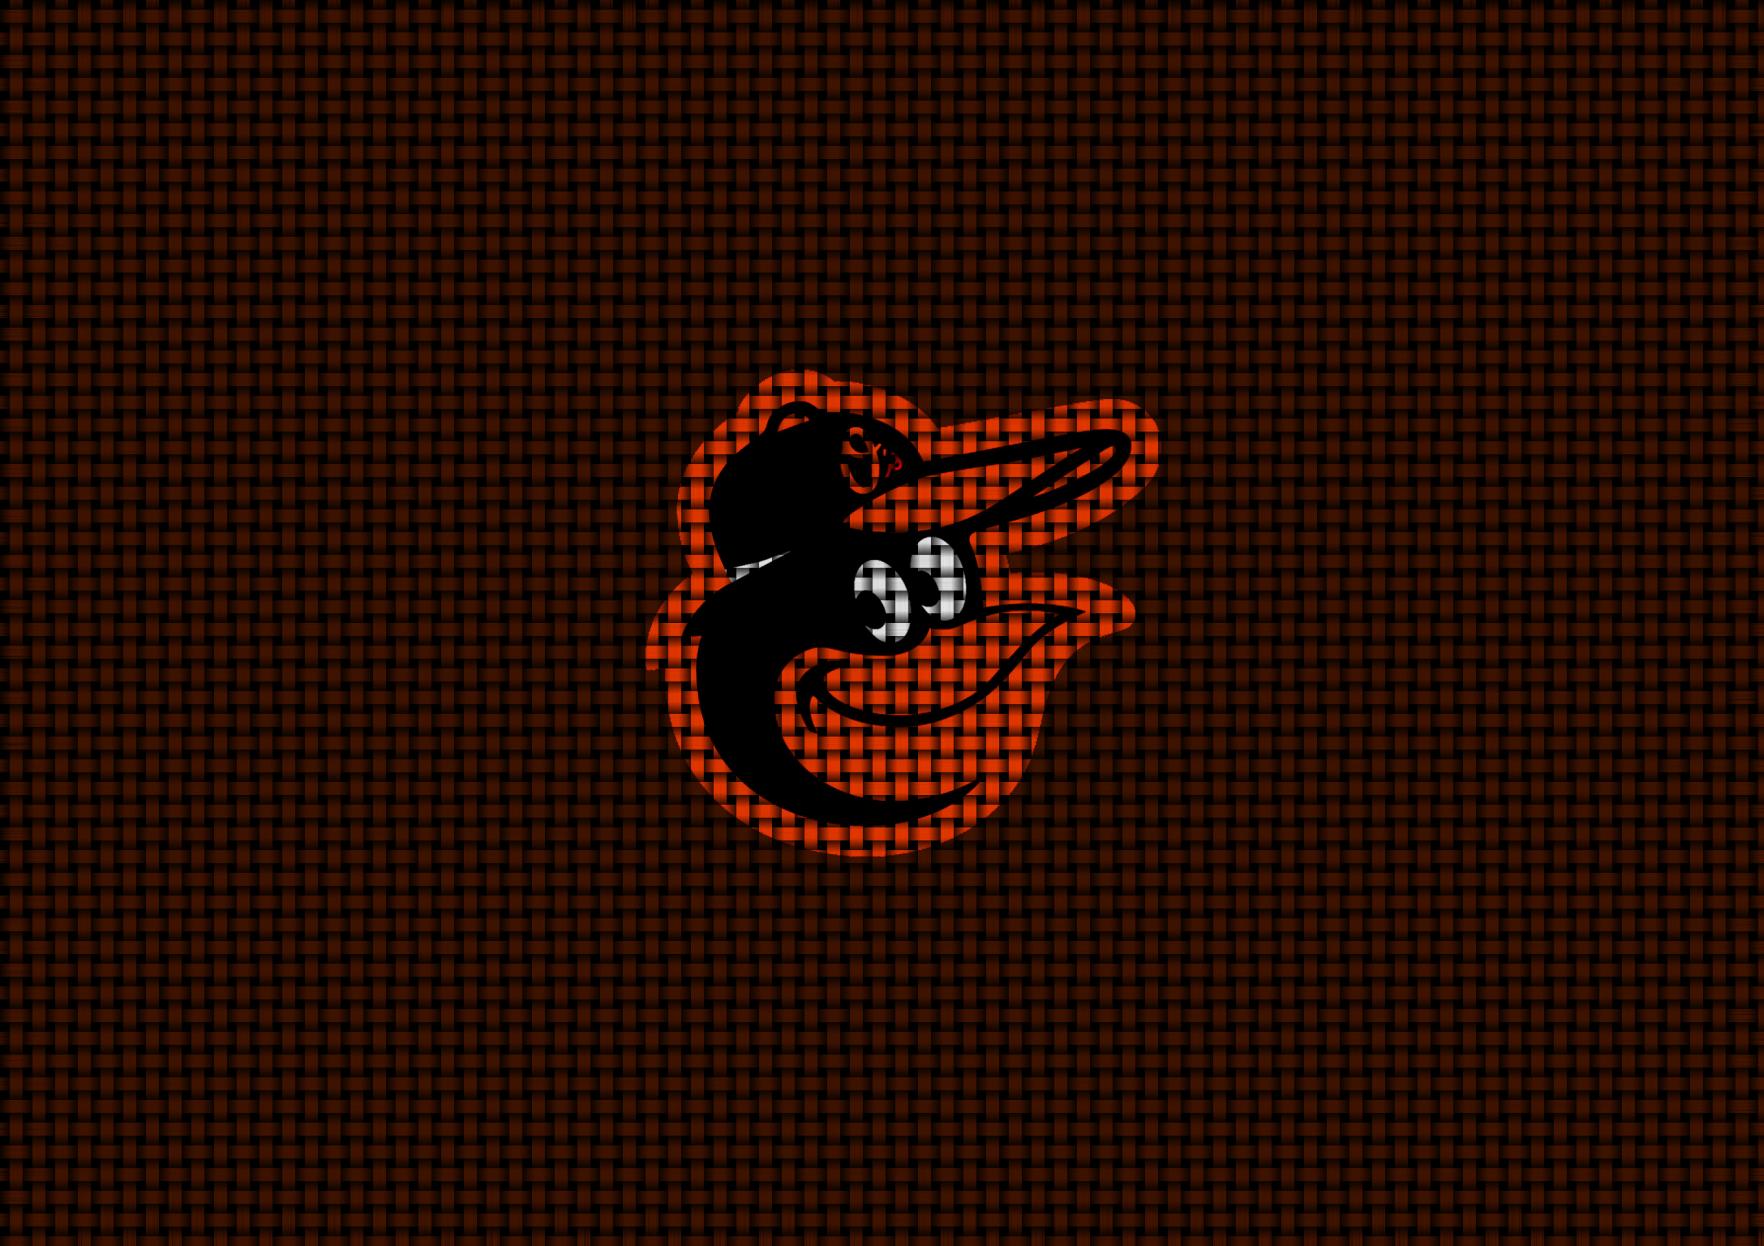 Wallpaper Baltimore Orioles Ravens Wallp Android Development